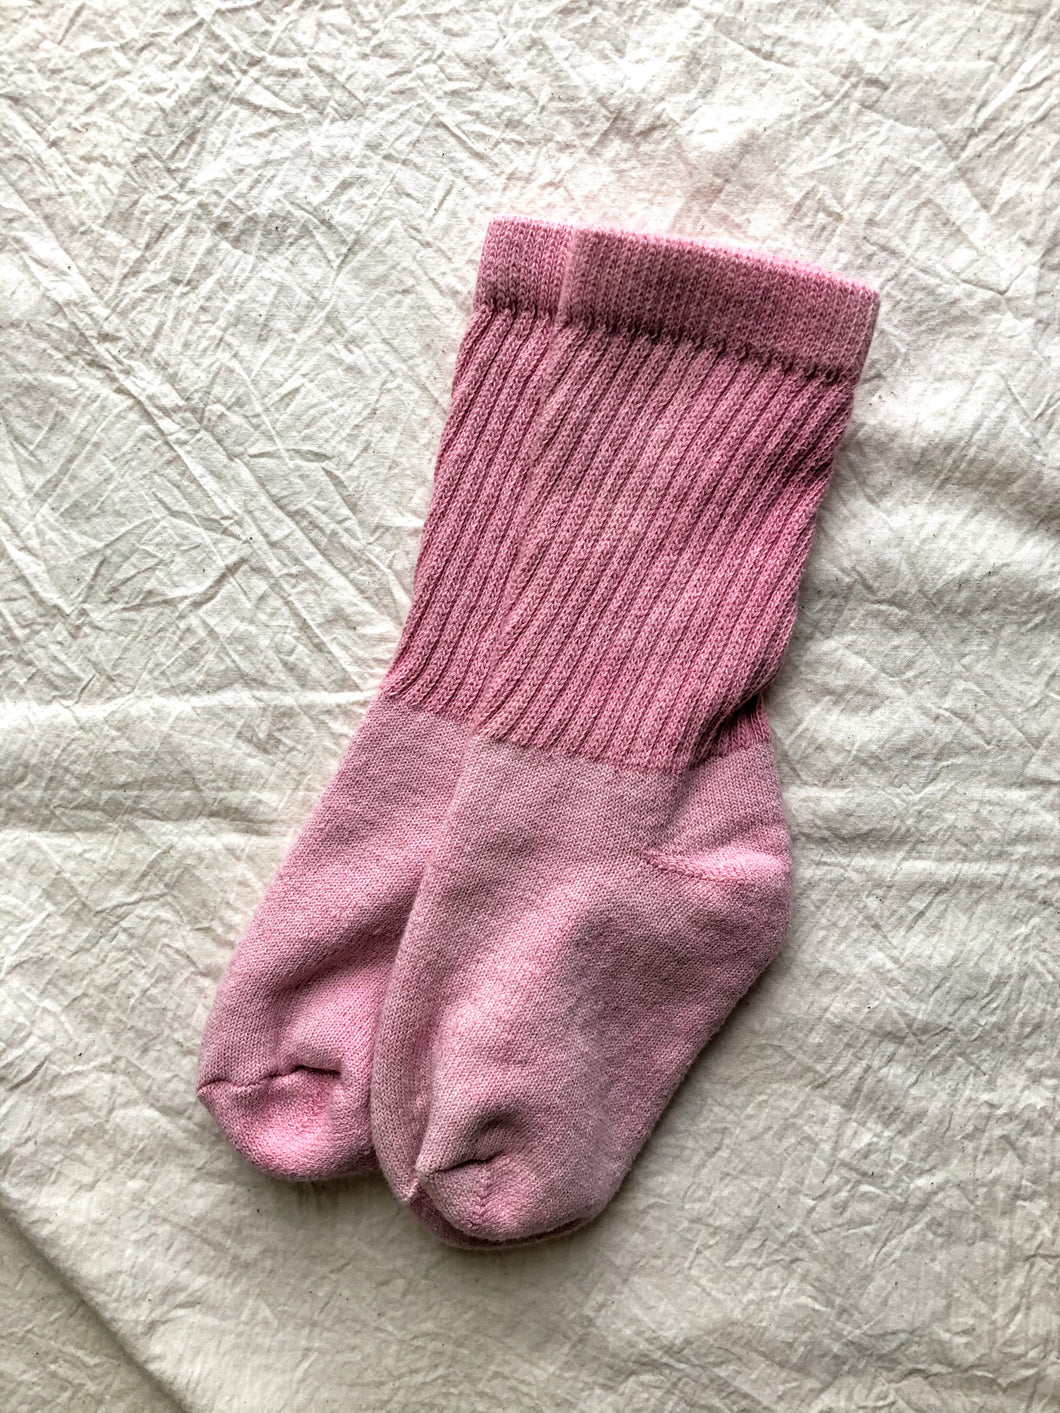 Botanical Dye Organic Cotton Socks - Bubblegum - XS/M